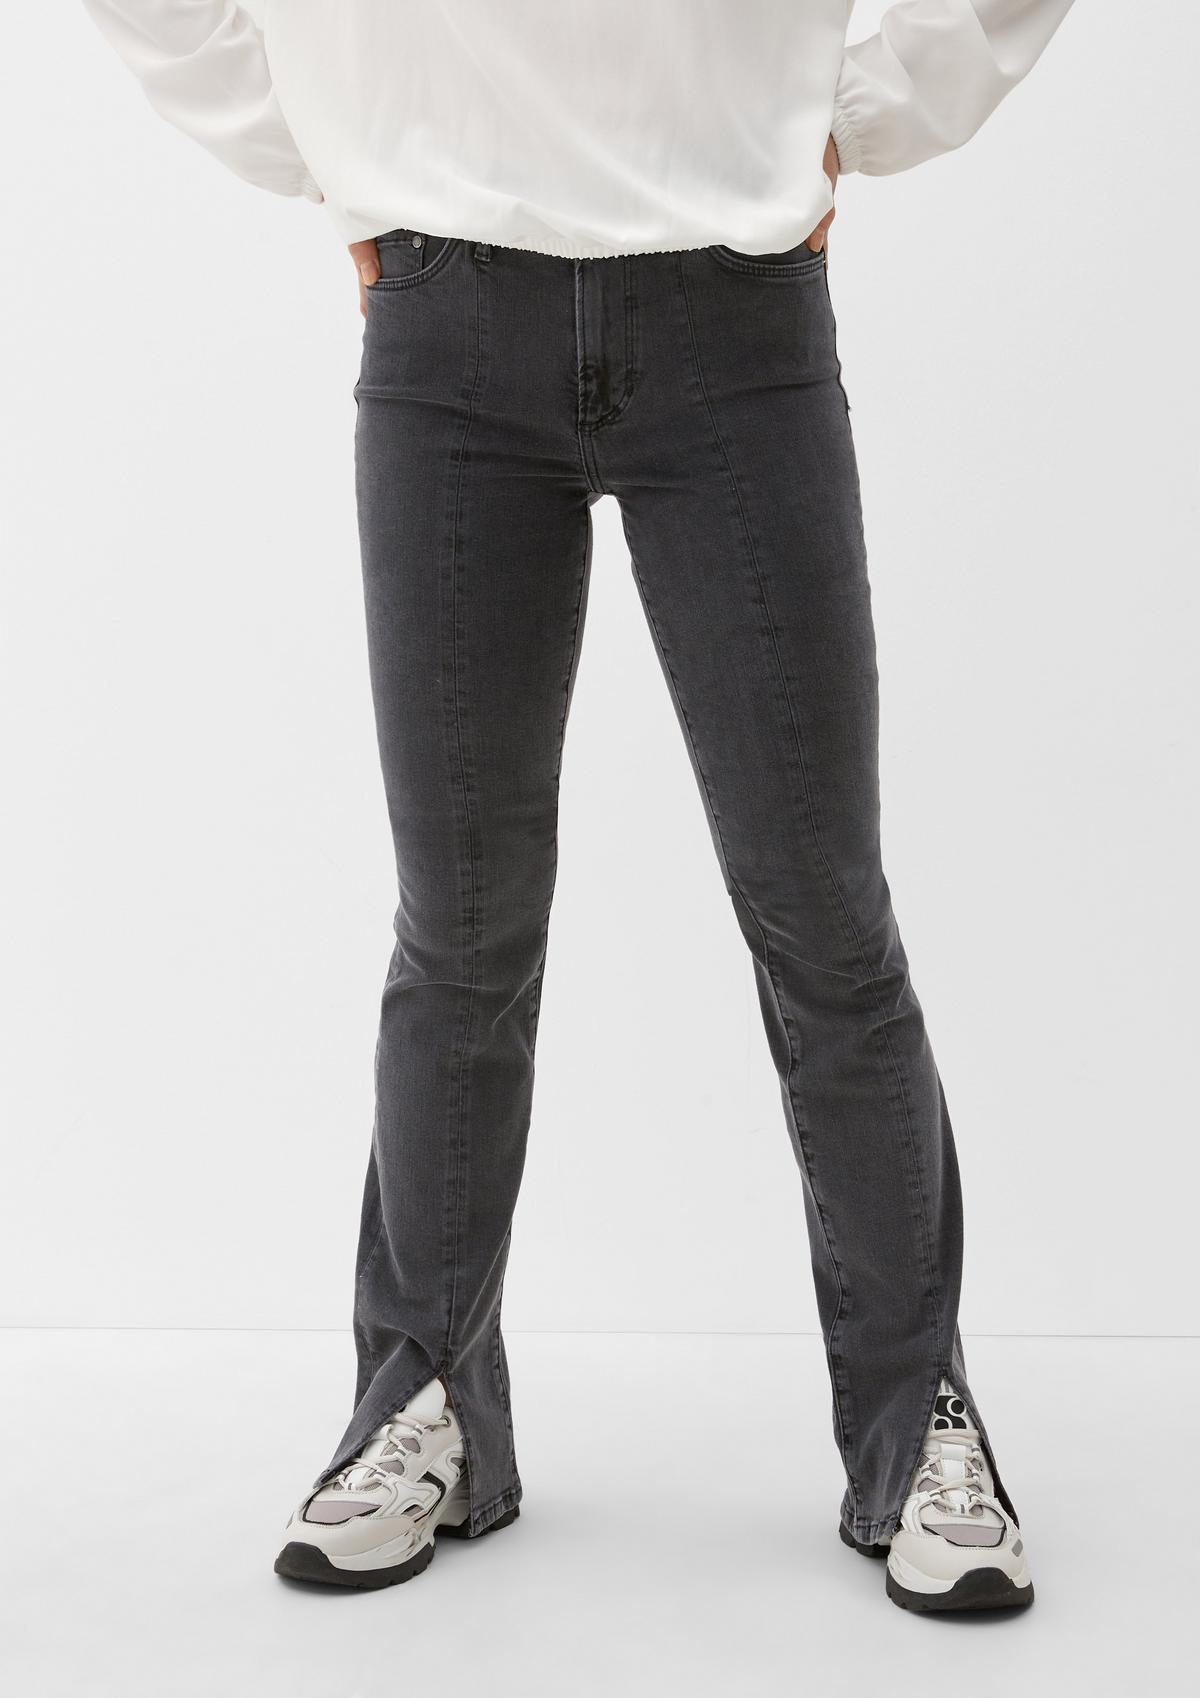 Levi's 724 high-rise straight leg jeans in black